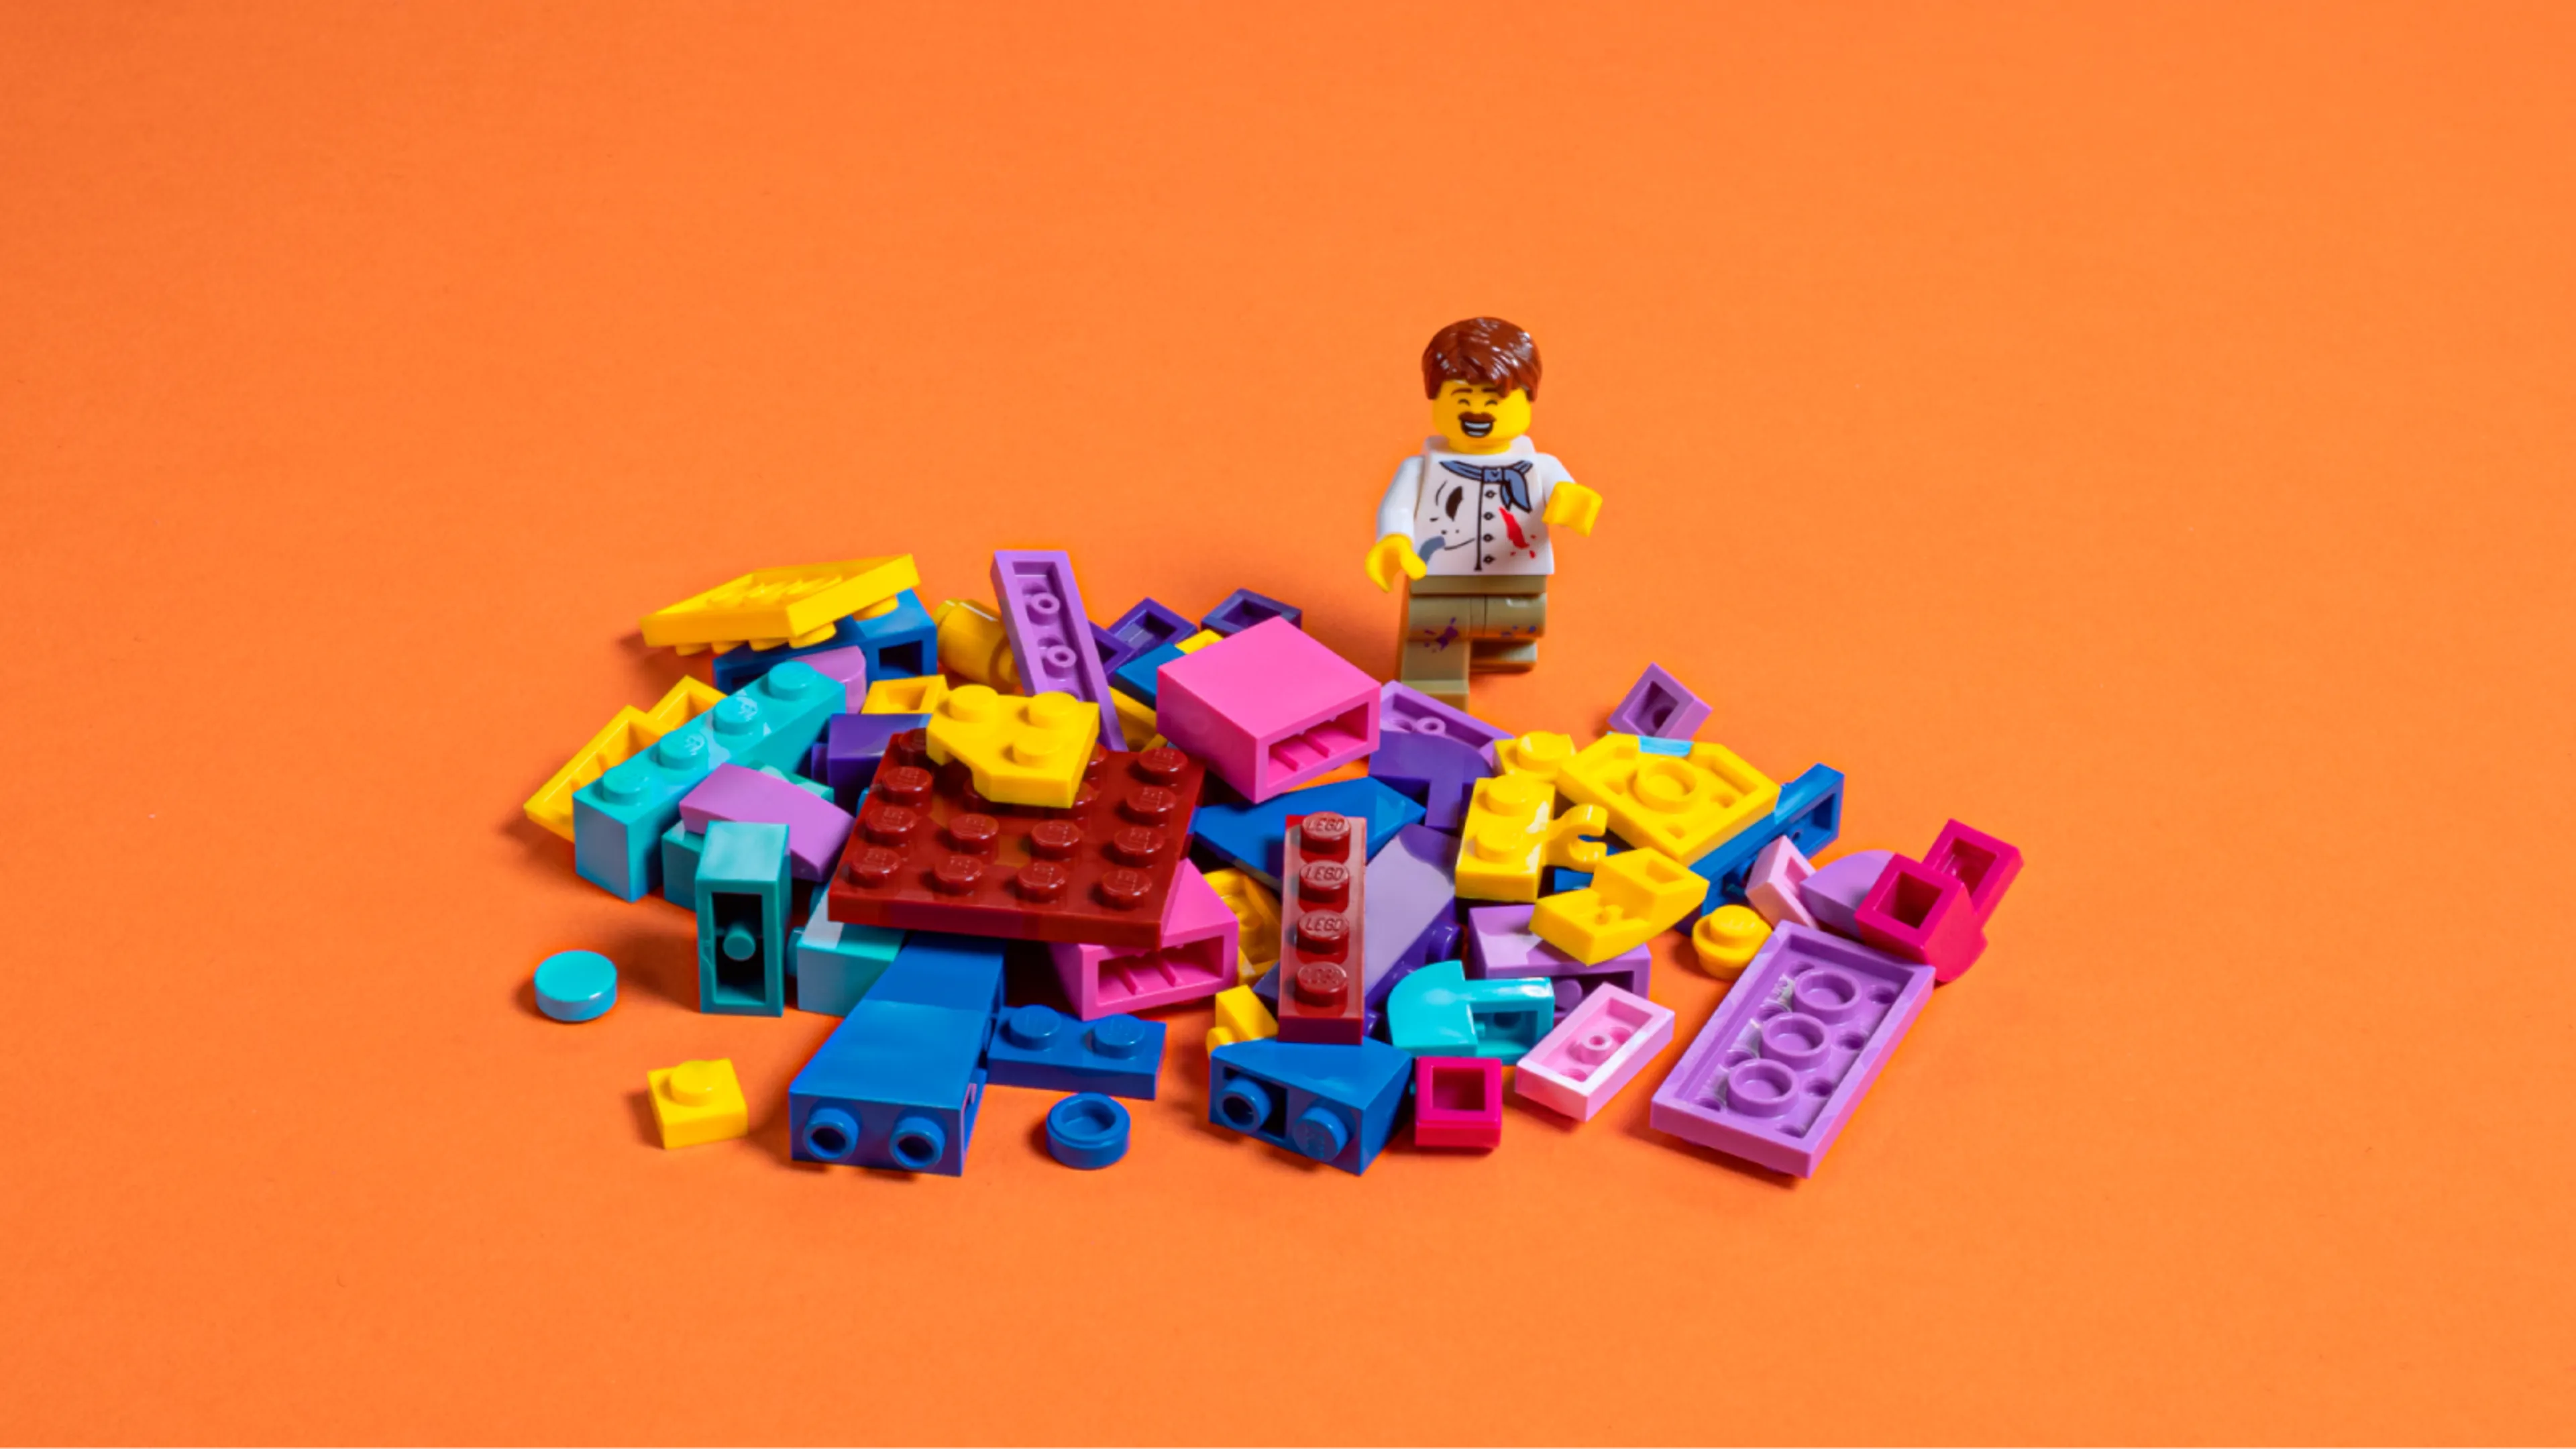 A minifigure and a pile of LEGO bricks